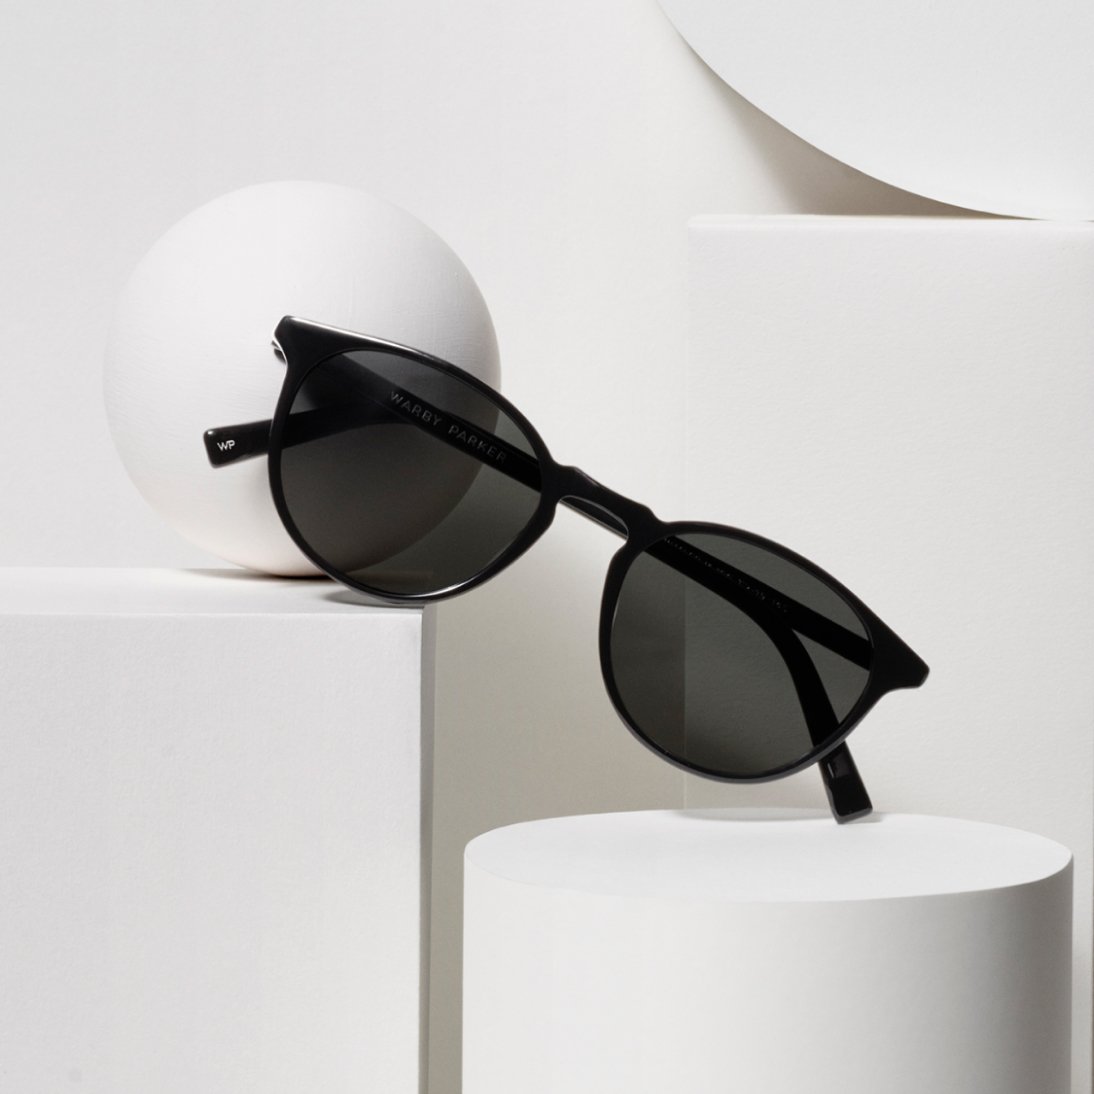 Sunglasses balanced on white geometric shapes